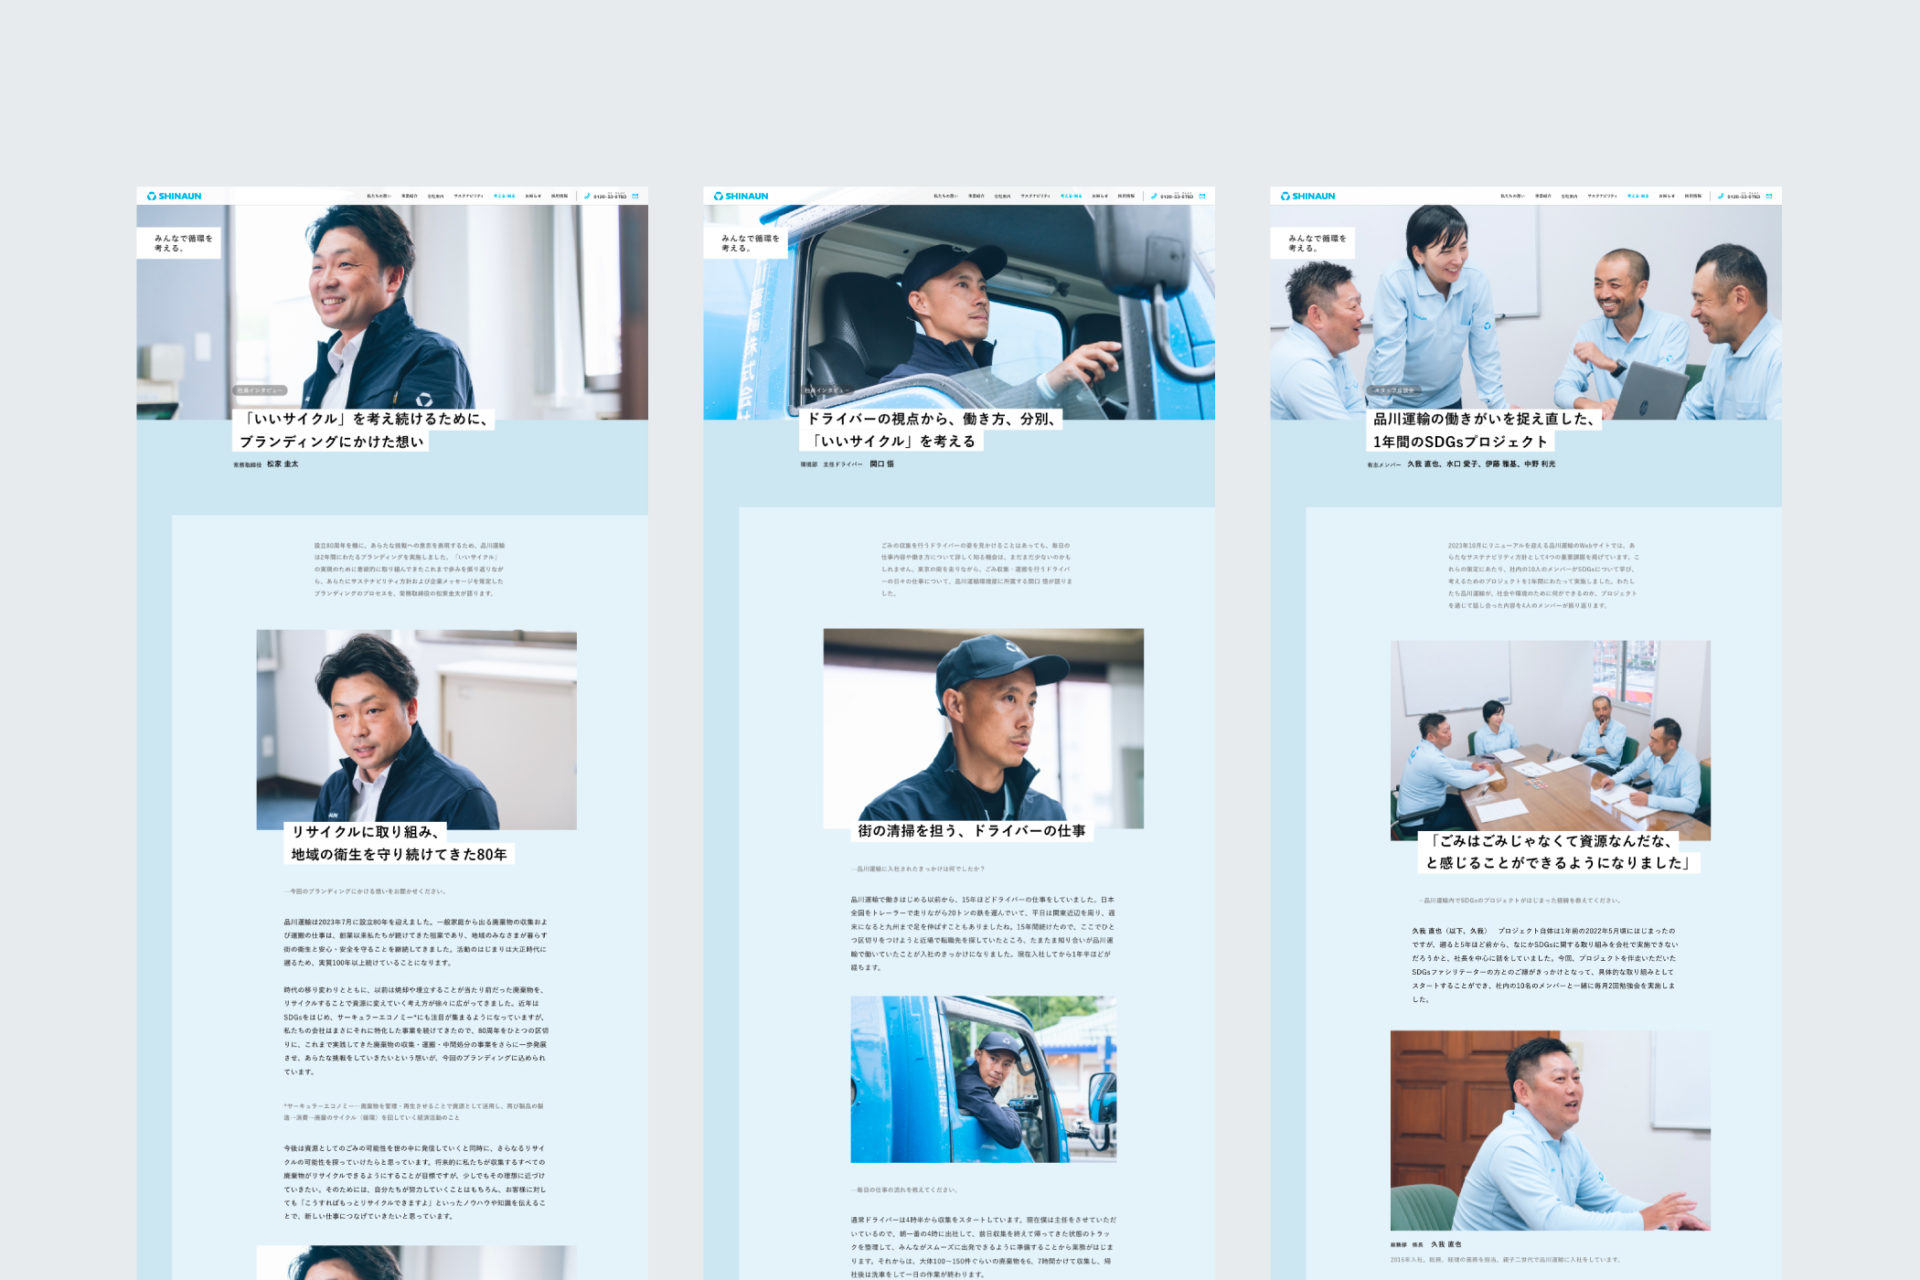 SHINAUN WEB Design